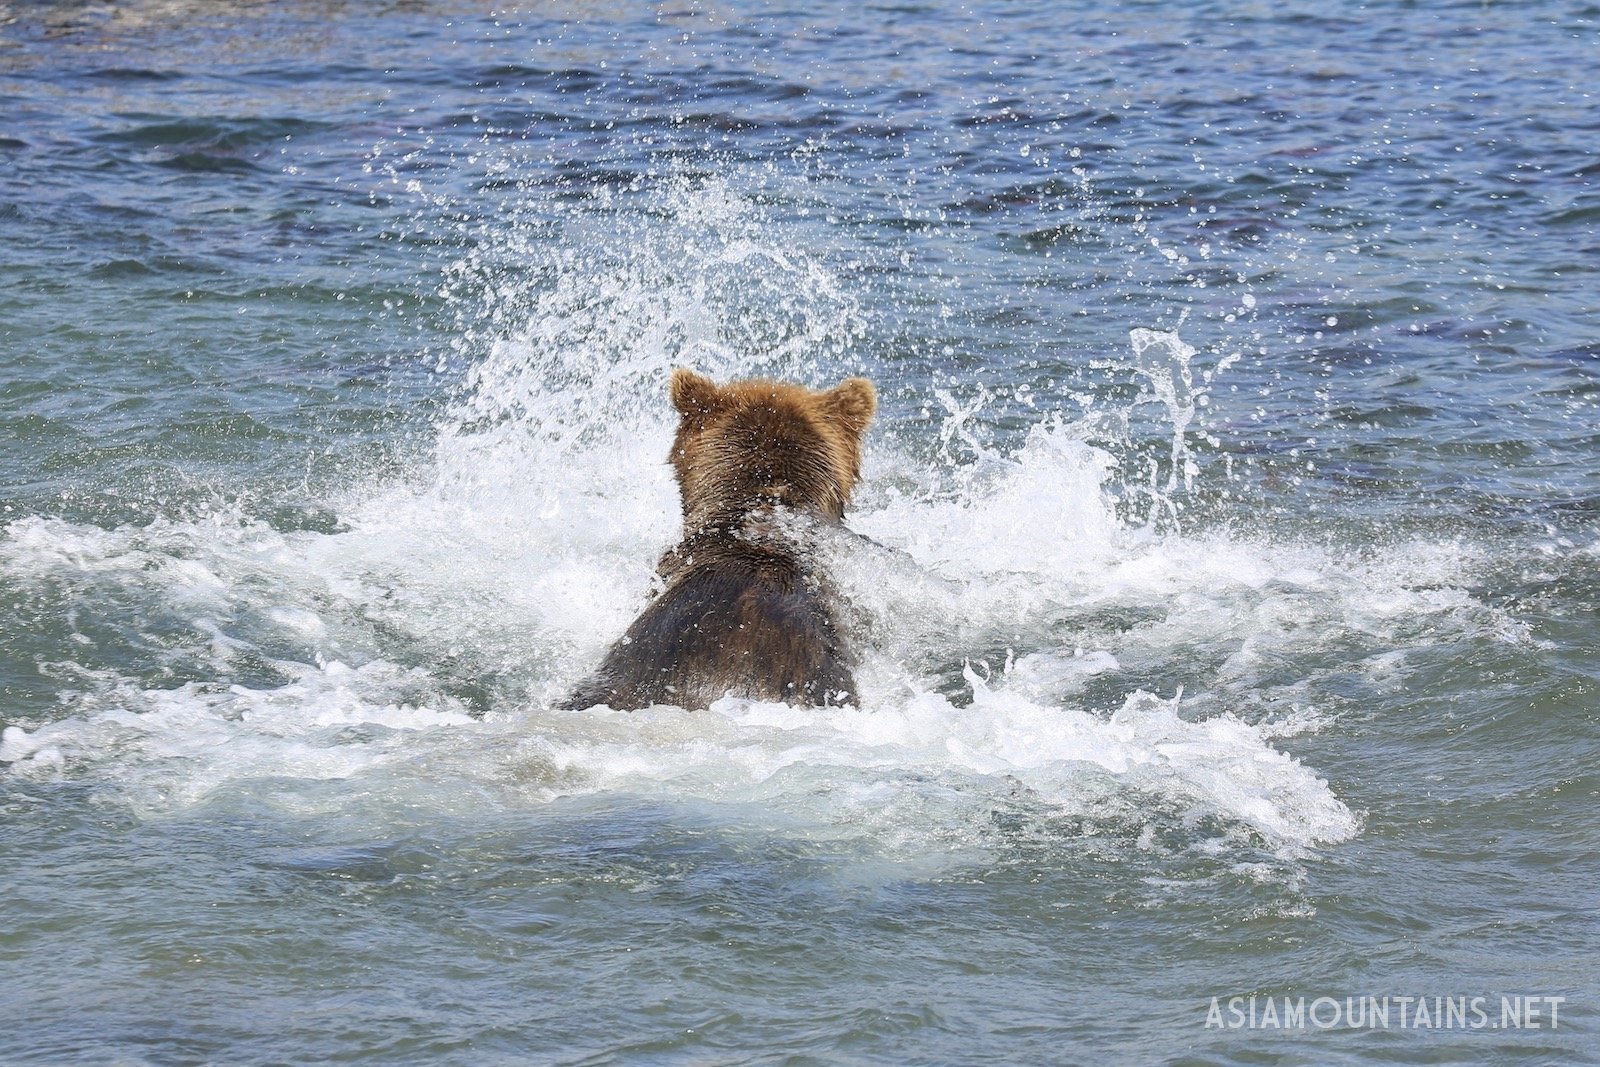 Unique kamchatka. Медведи Камчатки фото. Медведь и Рыбак ловят рыбу на Камчатке. Какие медведи на Камчатке. Камчатка Трэвел групп.